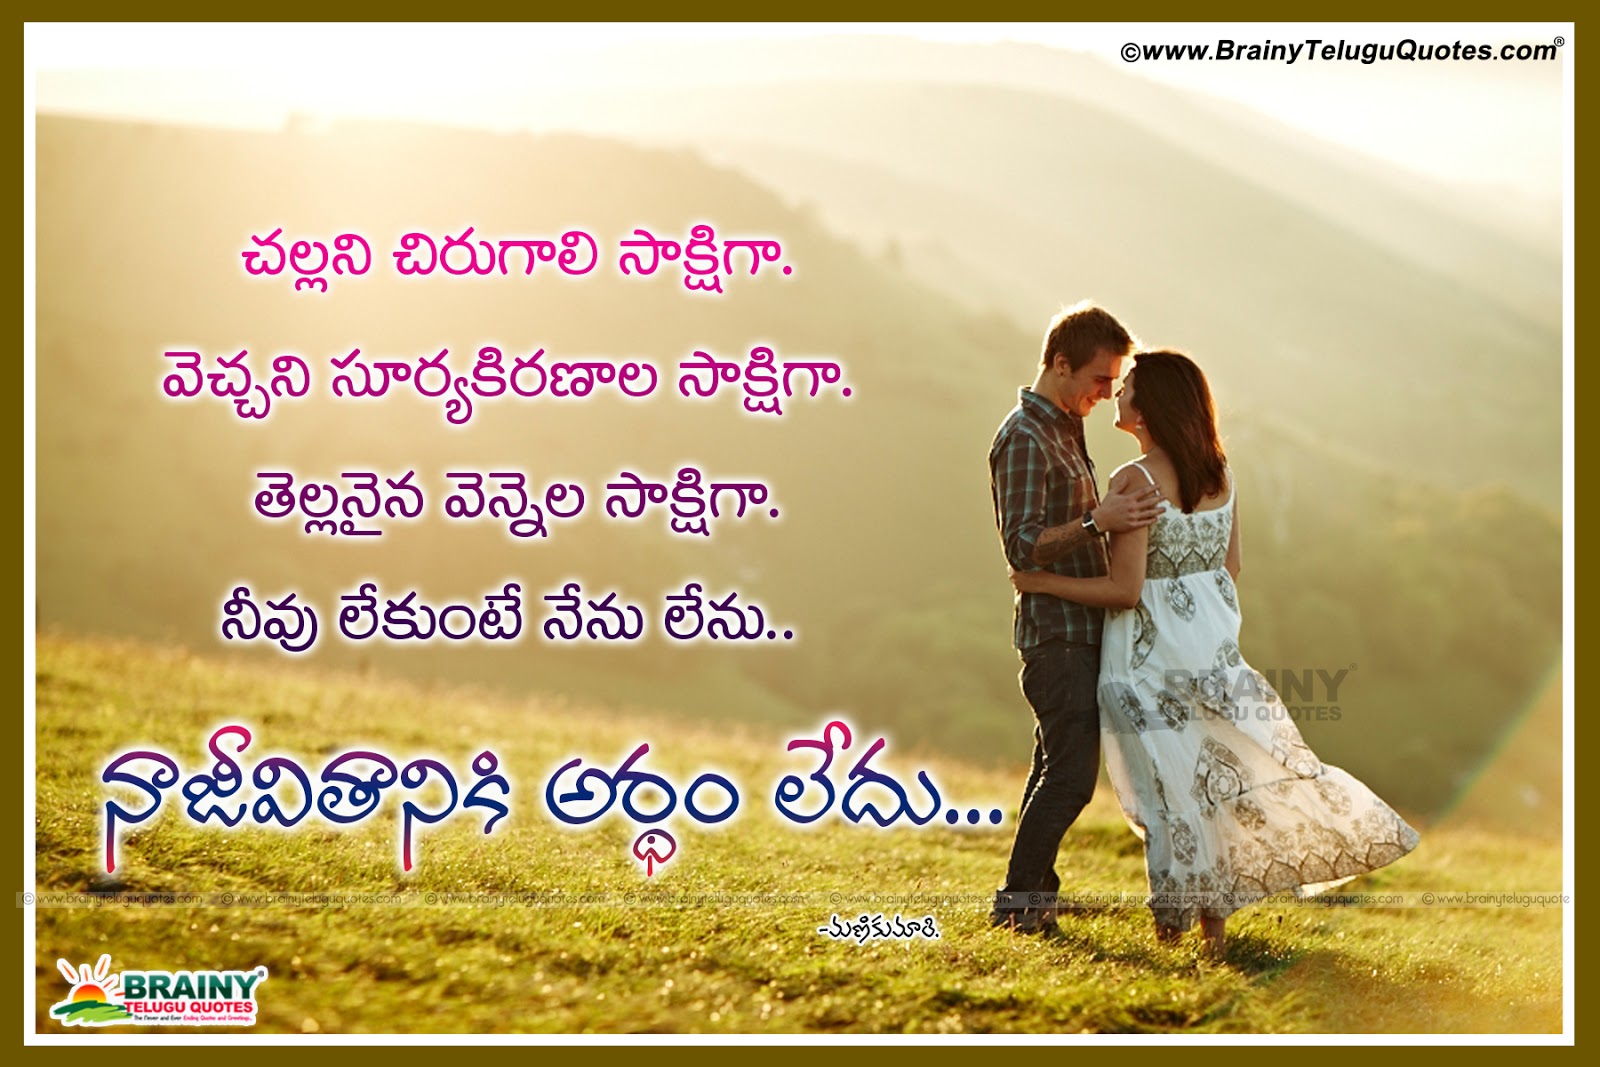 Romantic Telugu Love Quotes with Cute Couple Hd Wallpaper | BrainyTeluguQuotes.comTelugu quotes ...